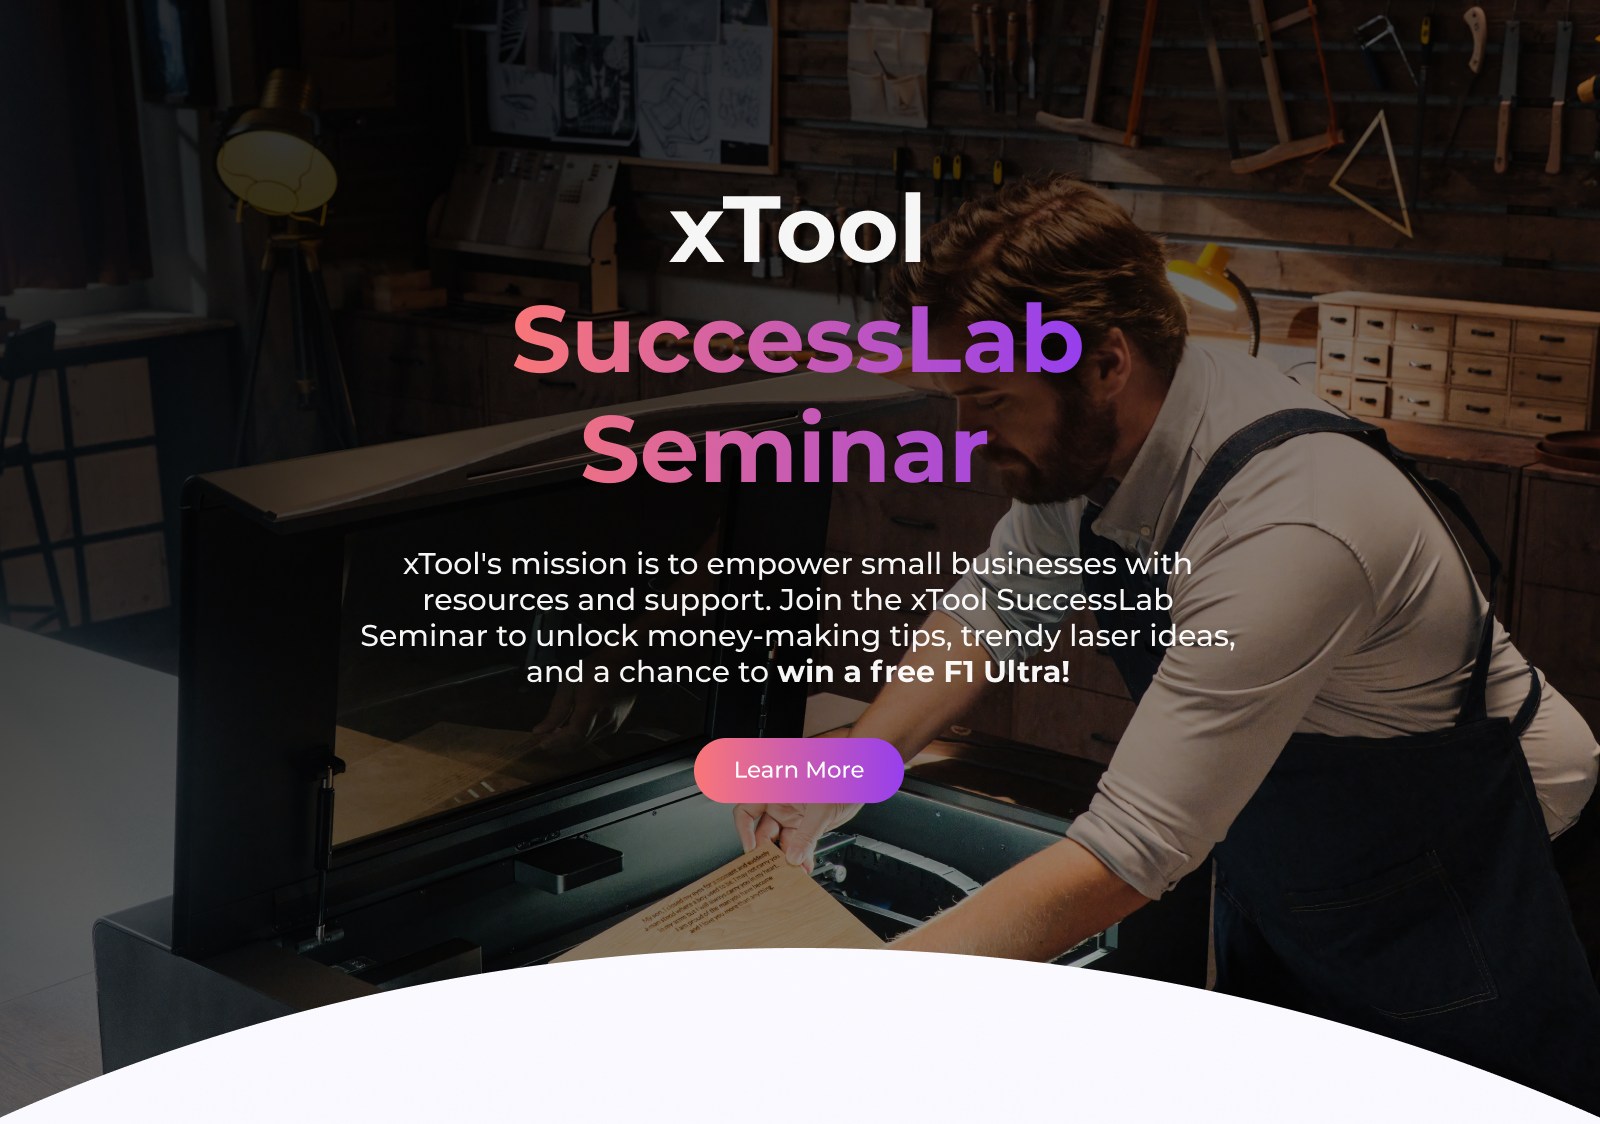 xTool SuccessLab Seminar